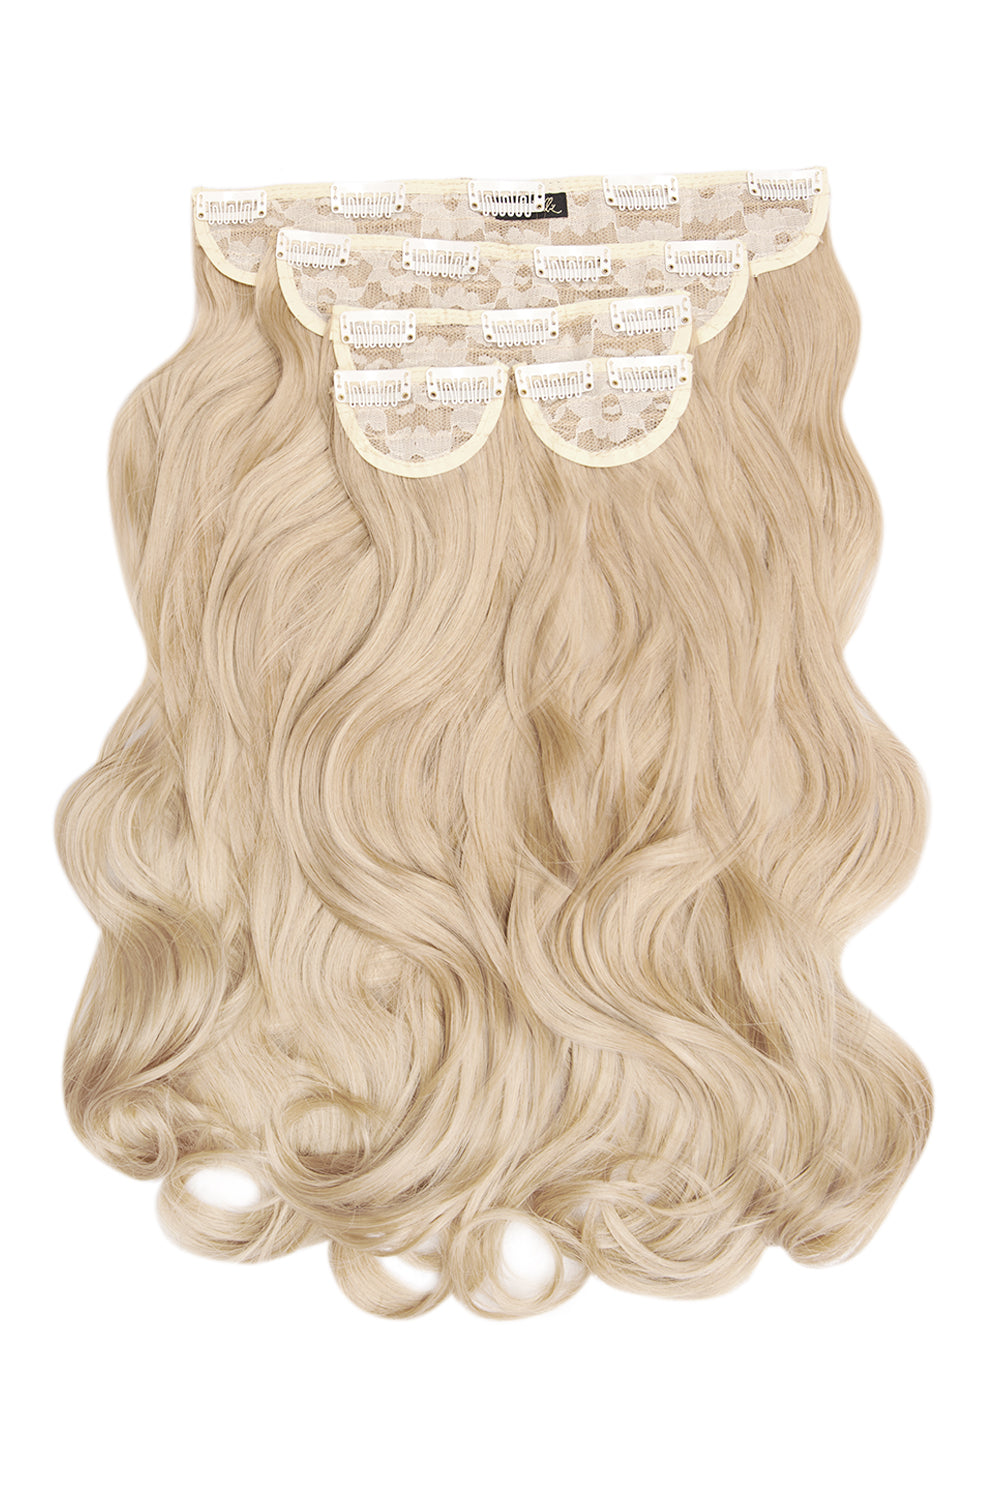 Super Thick 22" 5 Piece Natural Wavy Clip In Hair Extensions - LullaBellz - Light Golden Blonde